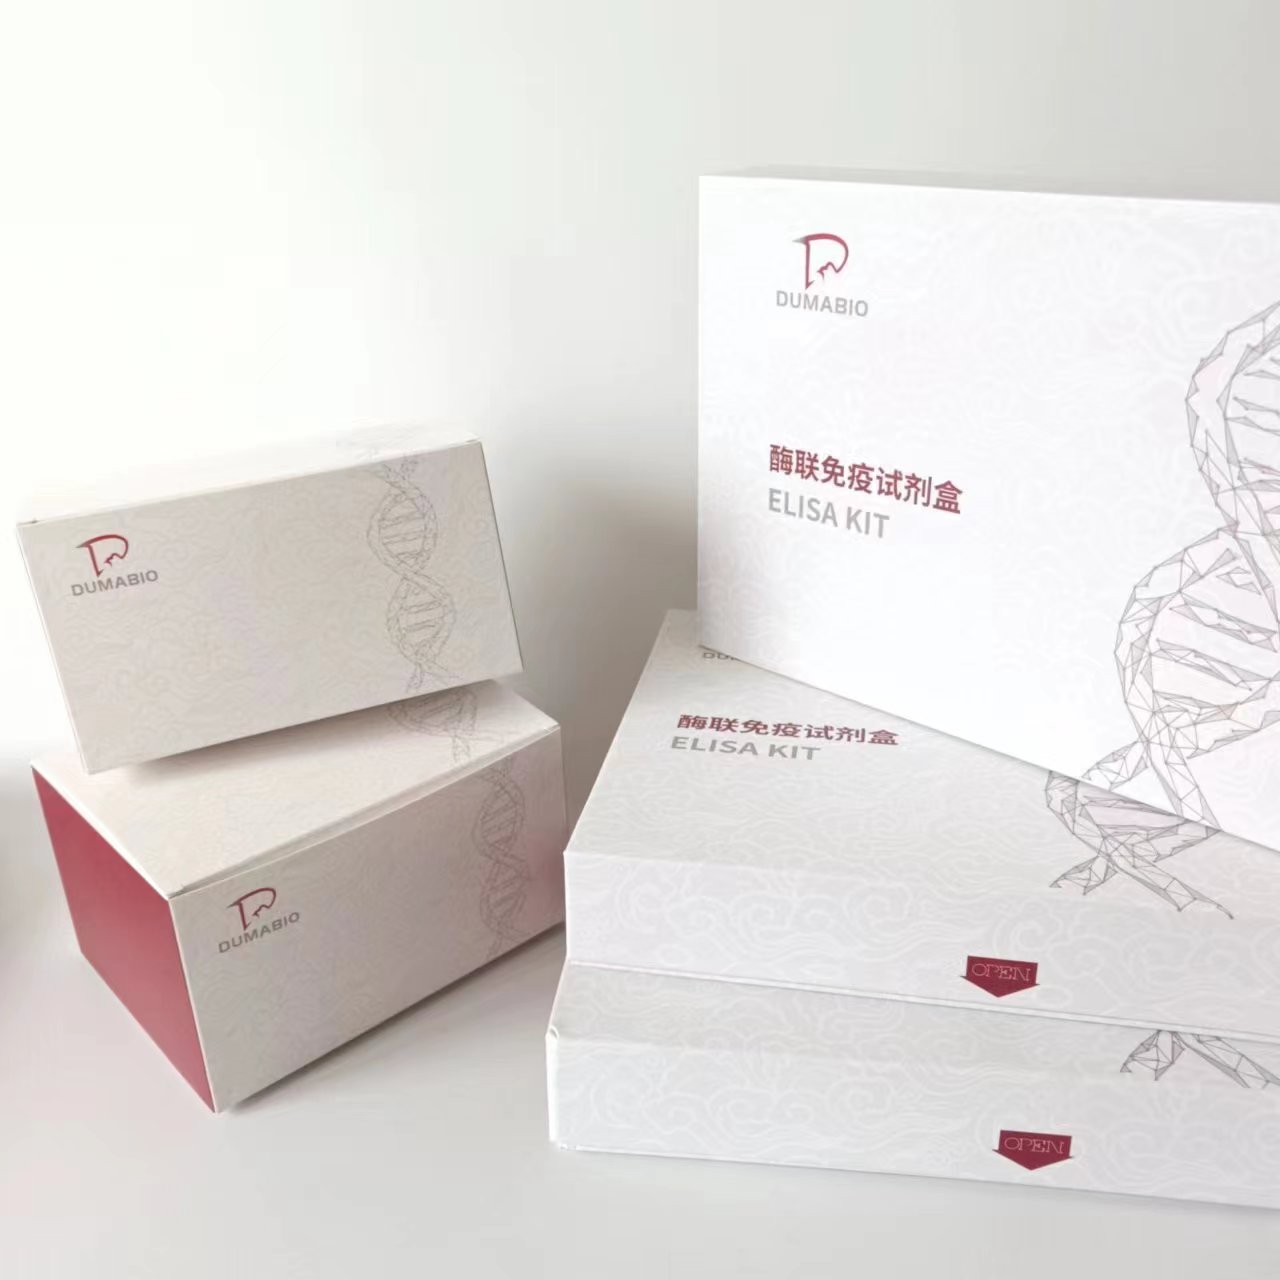 人抗染色体抗体(anti-chromosome Ab)ELISA试剂盒